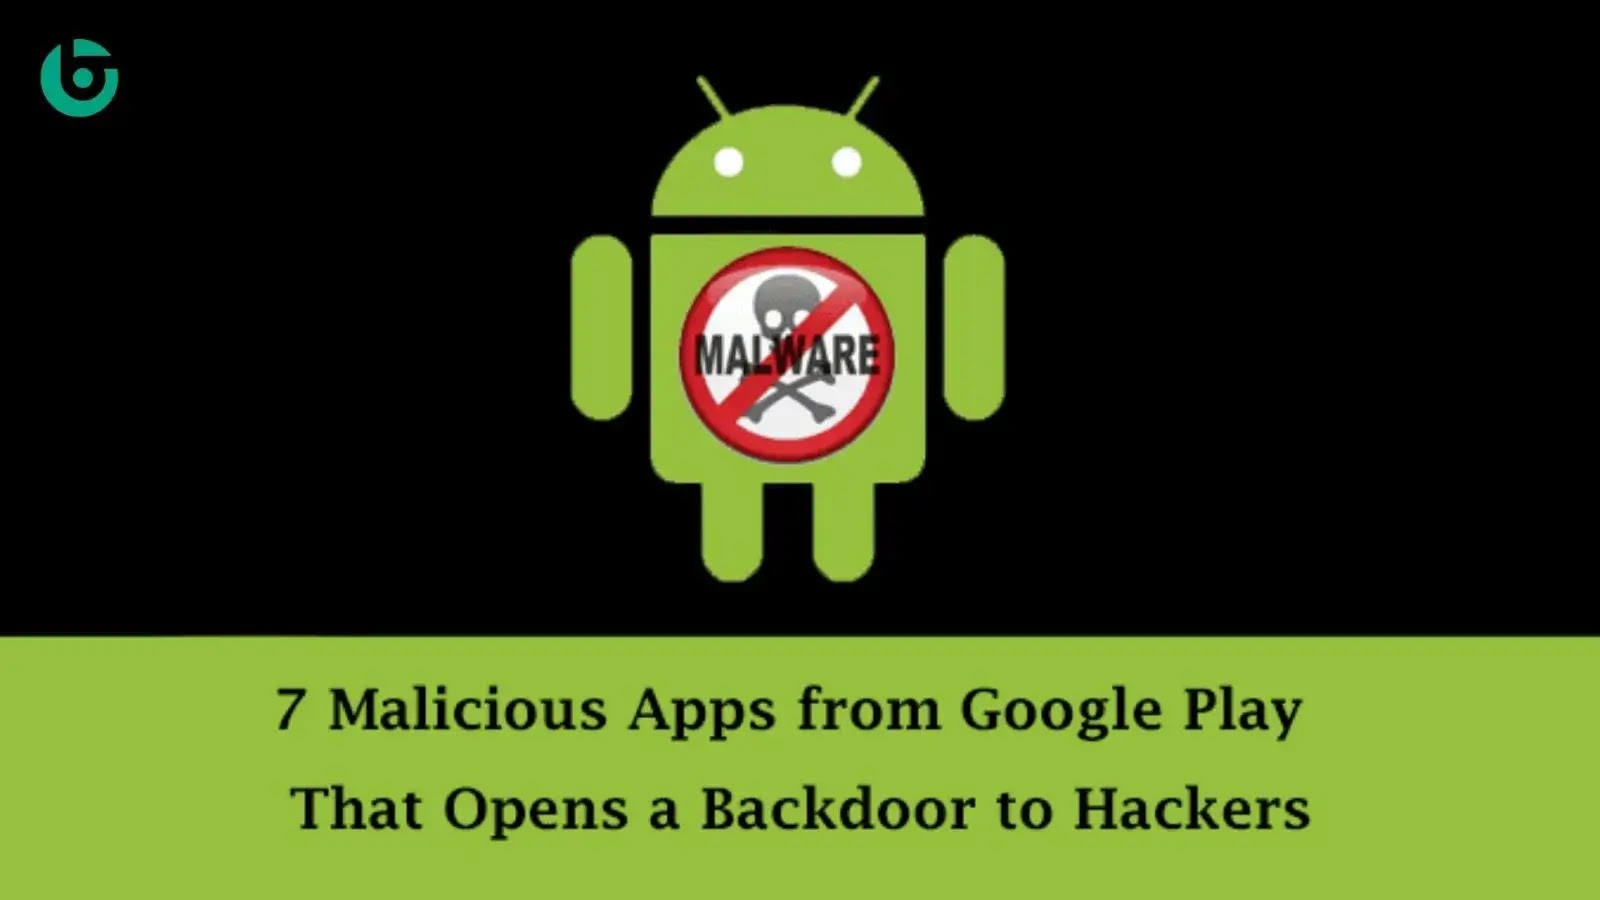 Hacker App: Wifi Password Hack – Apps on Google Play